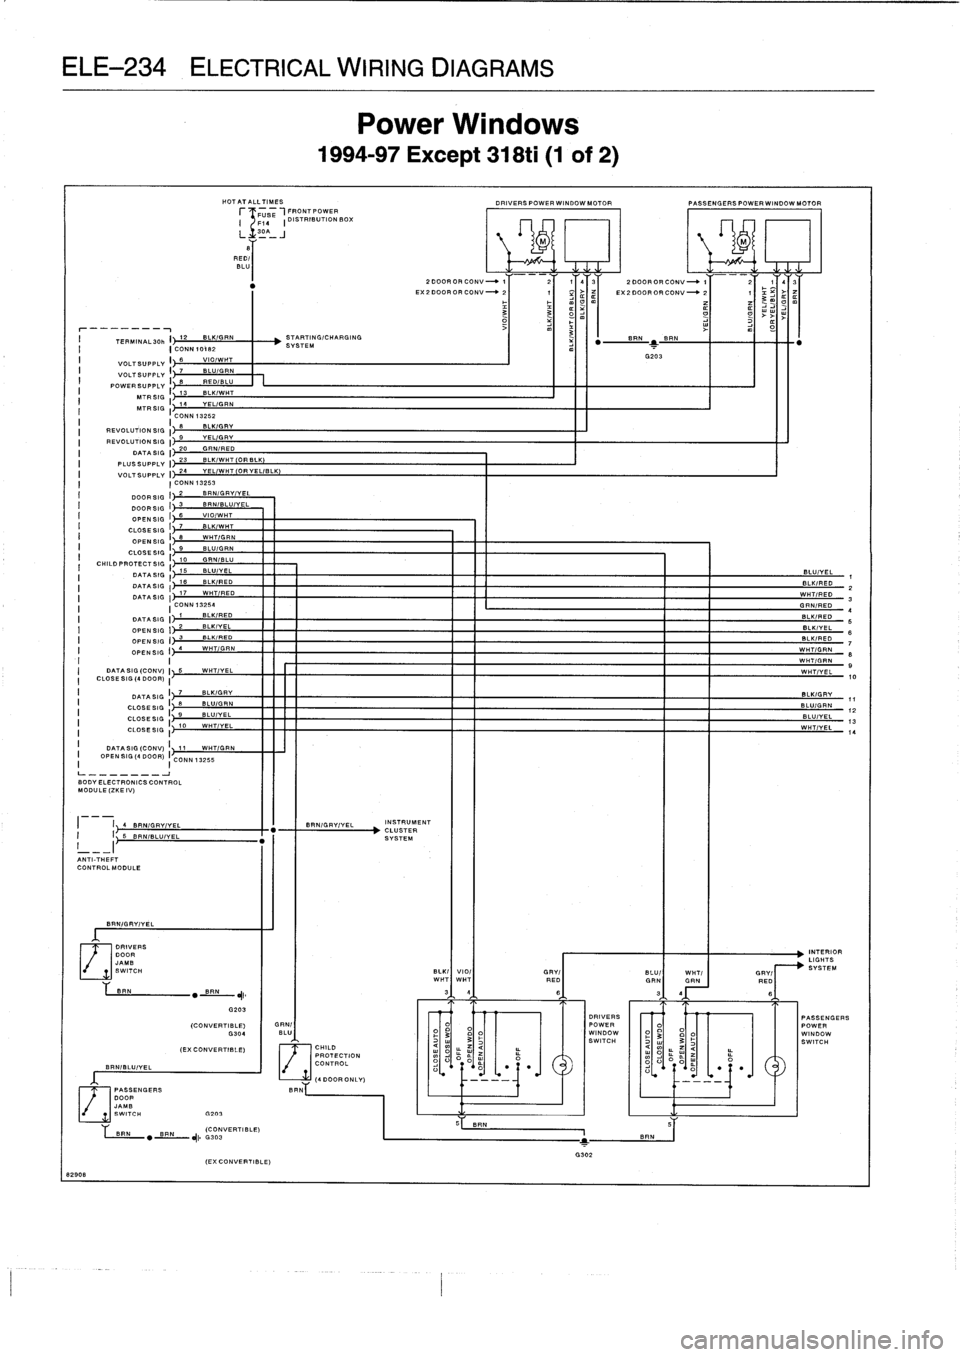 BMW 323i 1995 E36 Workshop Manual 
ELE-234
ELECTRICAL
WIRING
DIAGRAMS

82908

L
1
3
--J
8
RED/
BLU

I

	

TERMINAL30H
I
12

	

BLKIGRN

	

STARTING/CHARGING
I

	

ICONN10182

	

SYSTEM

BLK/GRV
REVOLUTIONSIG
I~
~
9
REVOLUTIONSIG
I)
-
